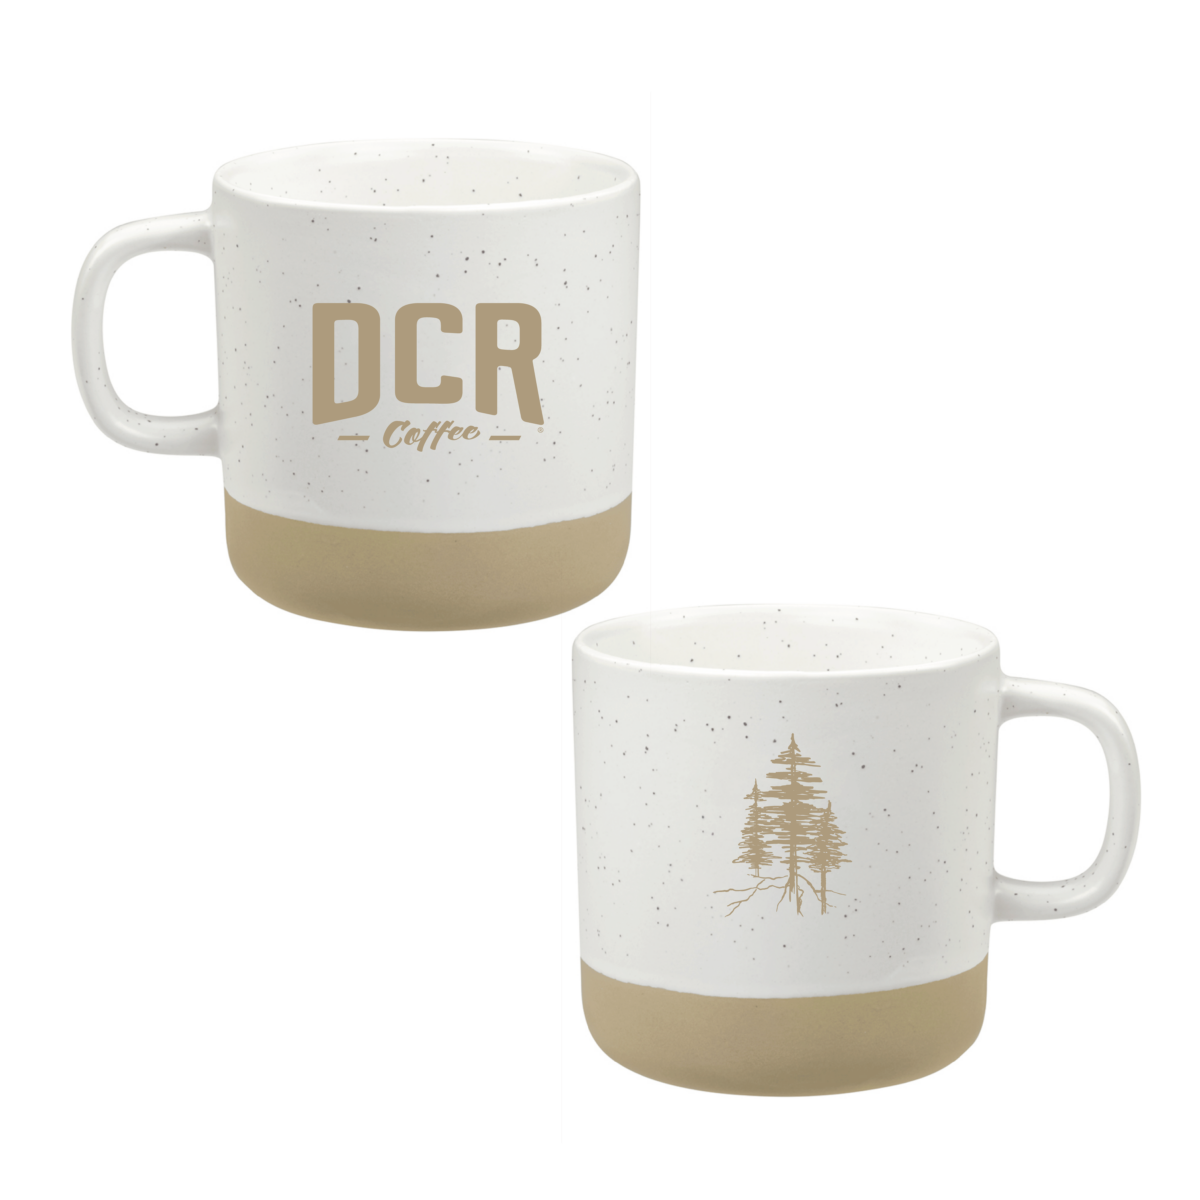 DCR Coffee Shot Glass